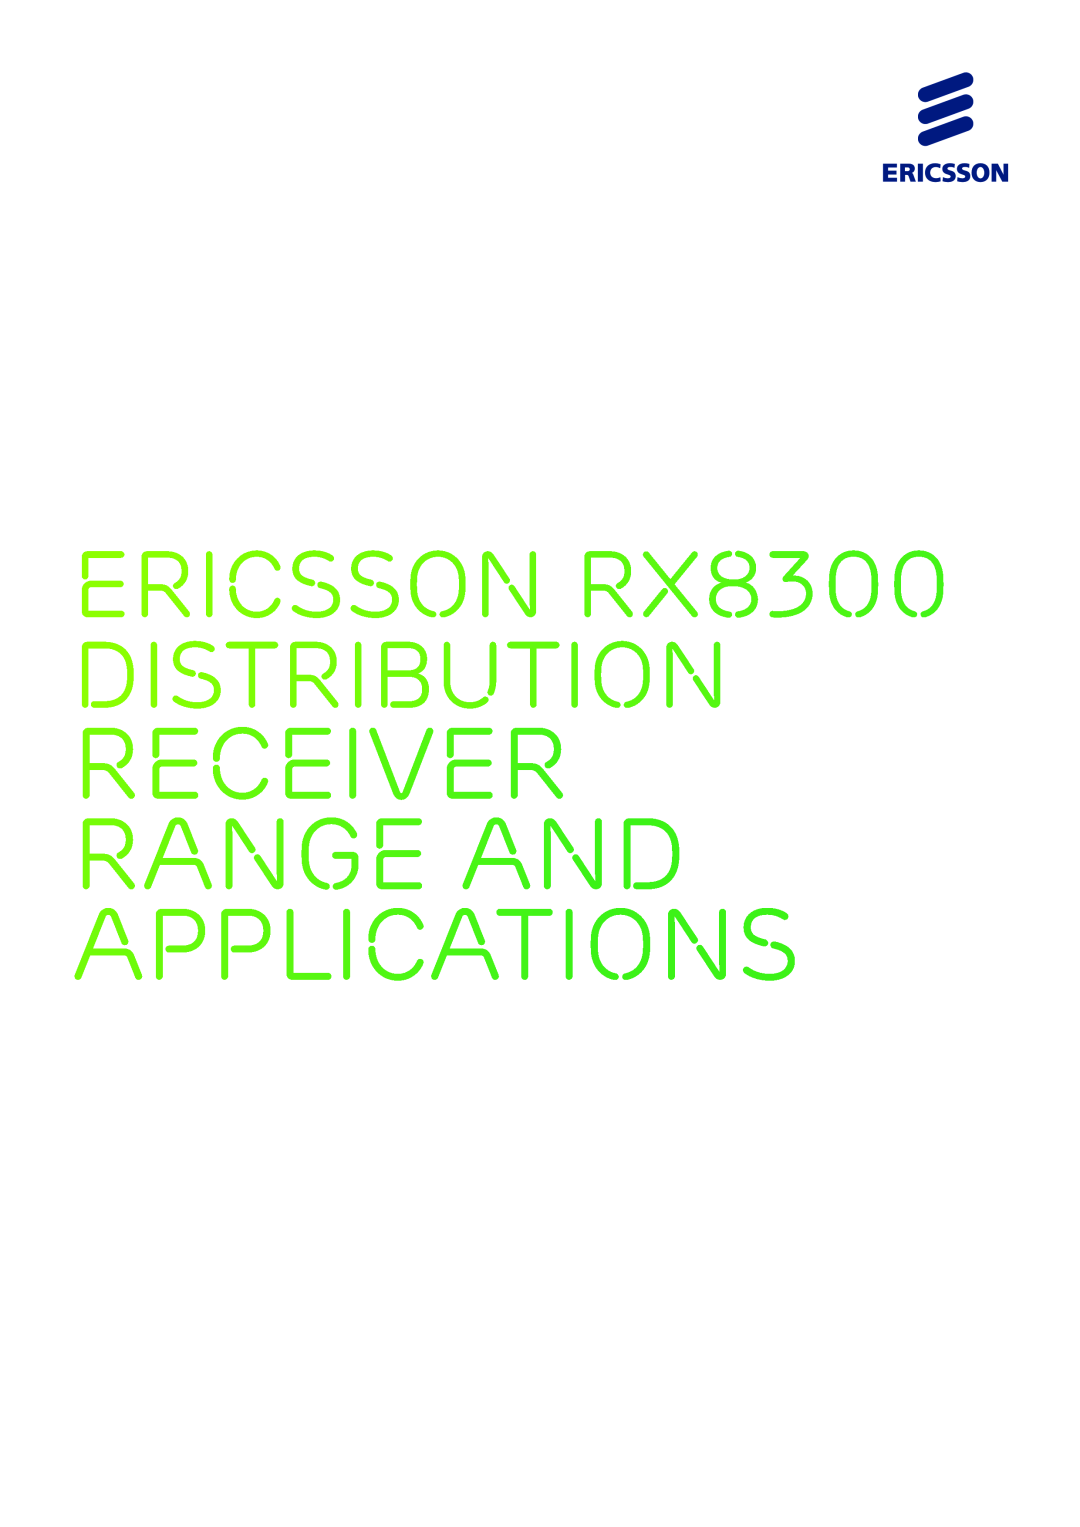 Ericsson manual Receiver Range And Applications, ERICSSON RX8300 DISTRIBUTION 